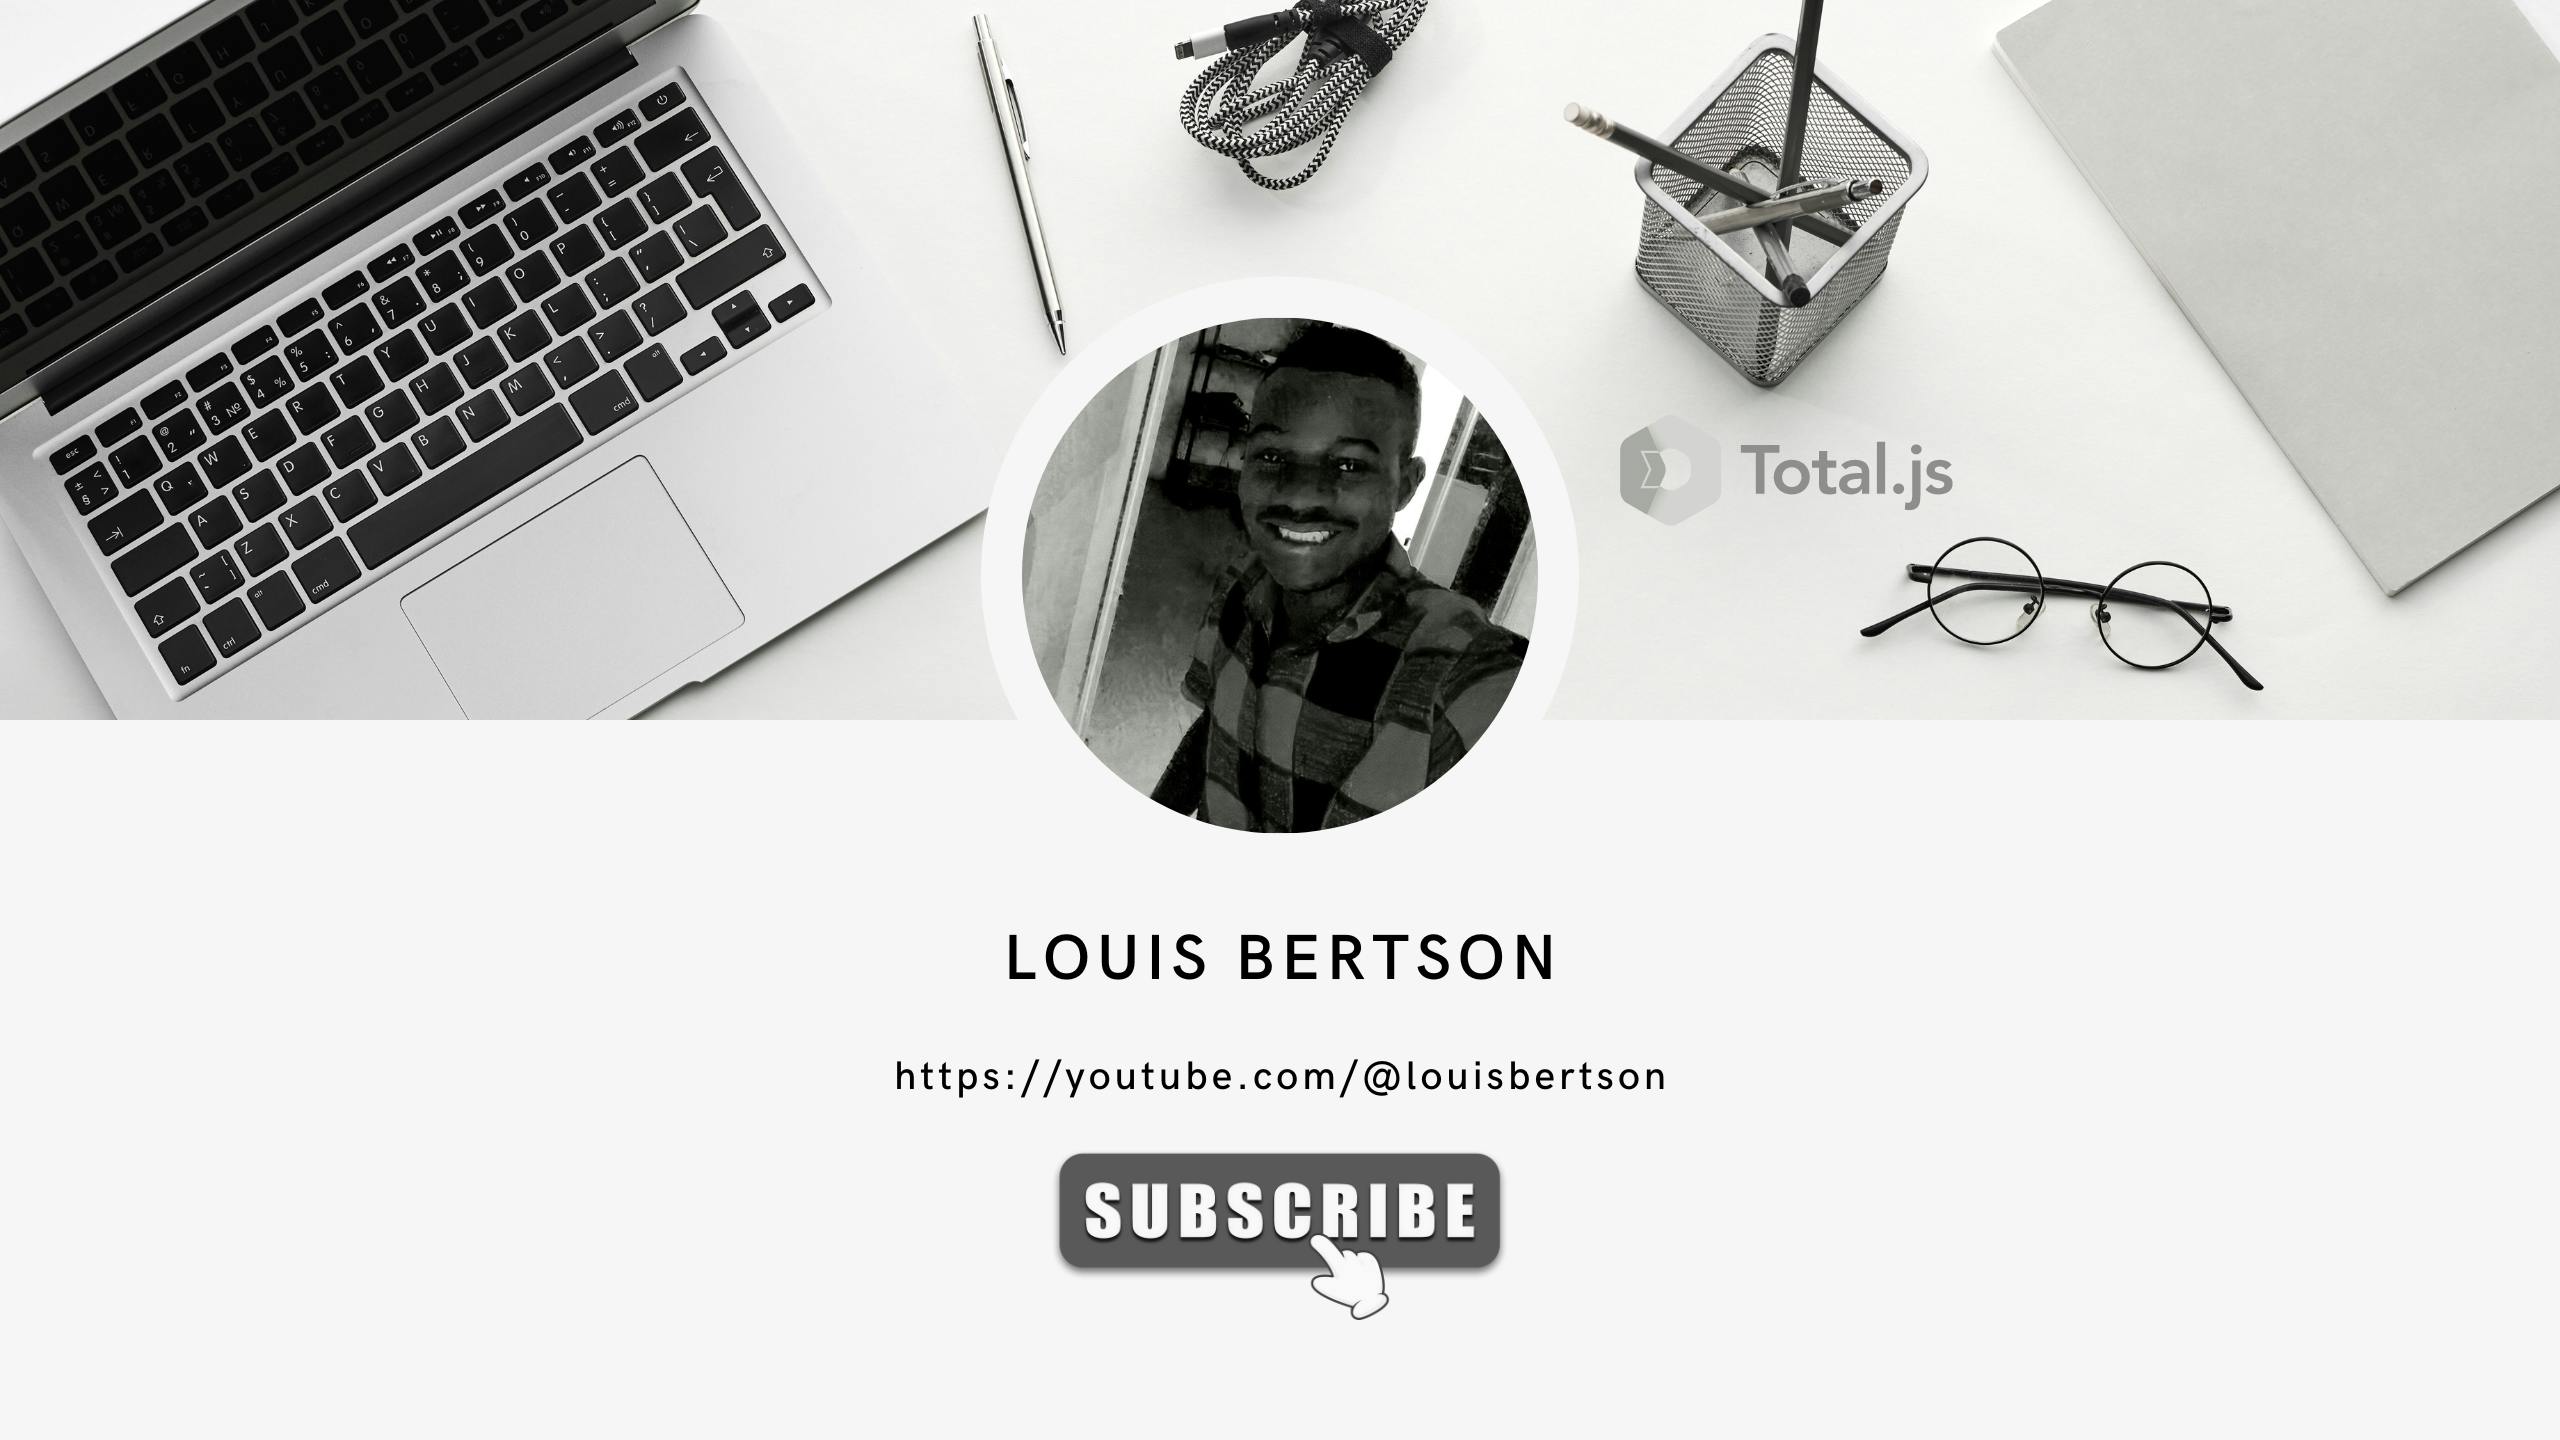 Youtube Chanel of Louis Bertson